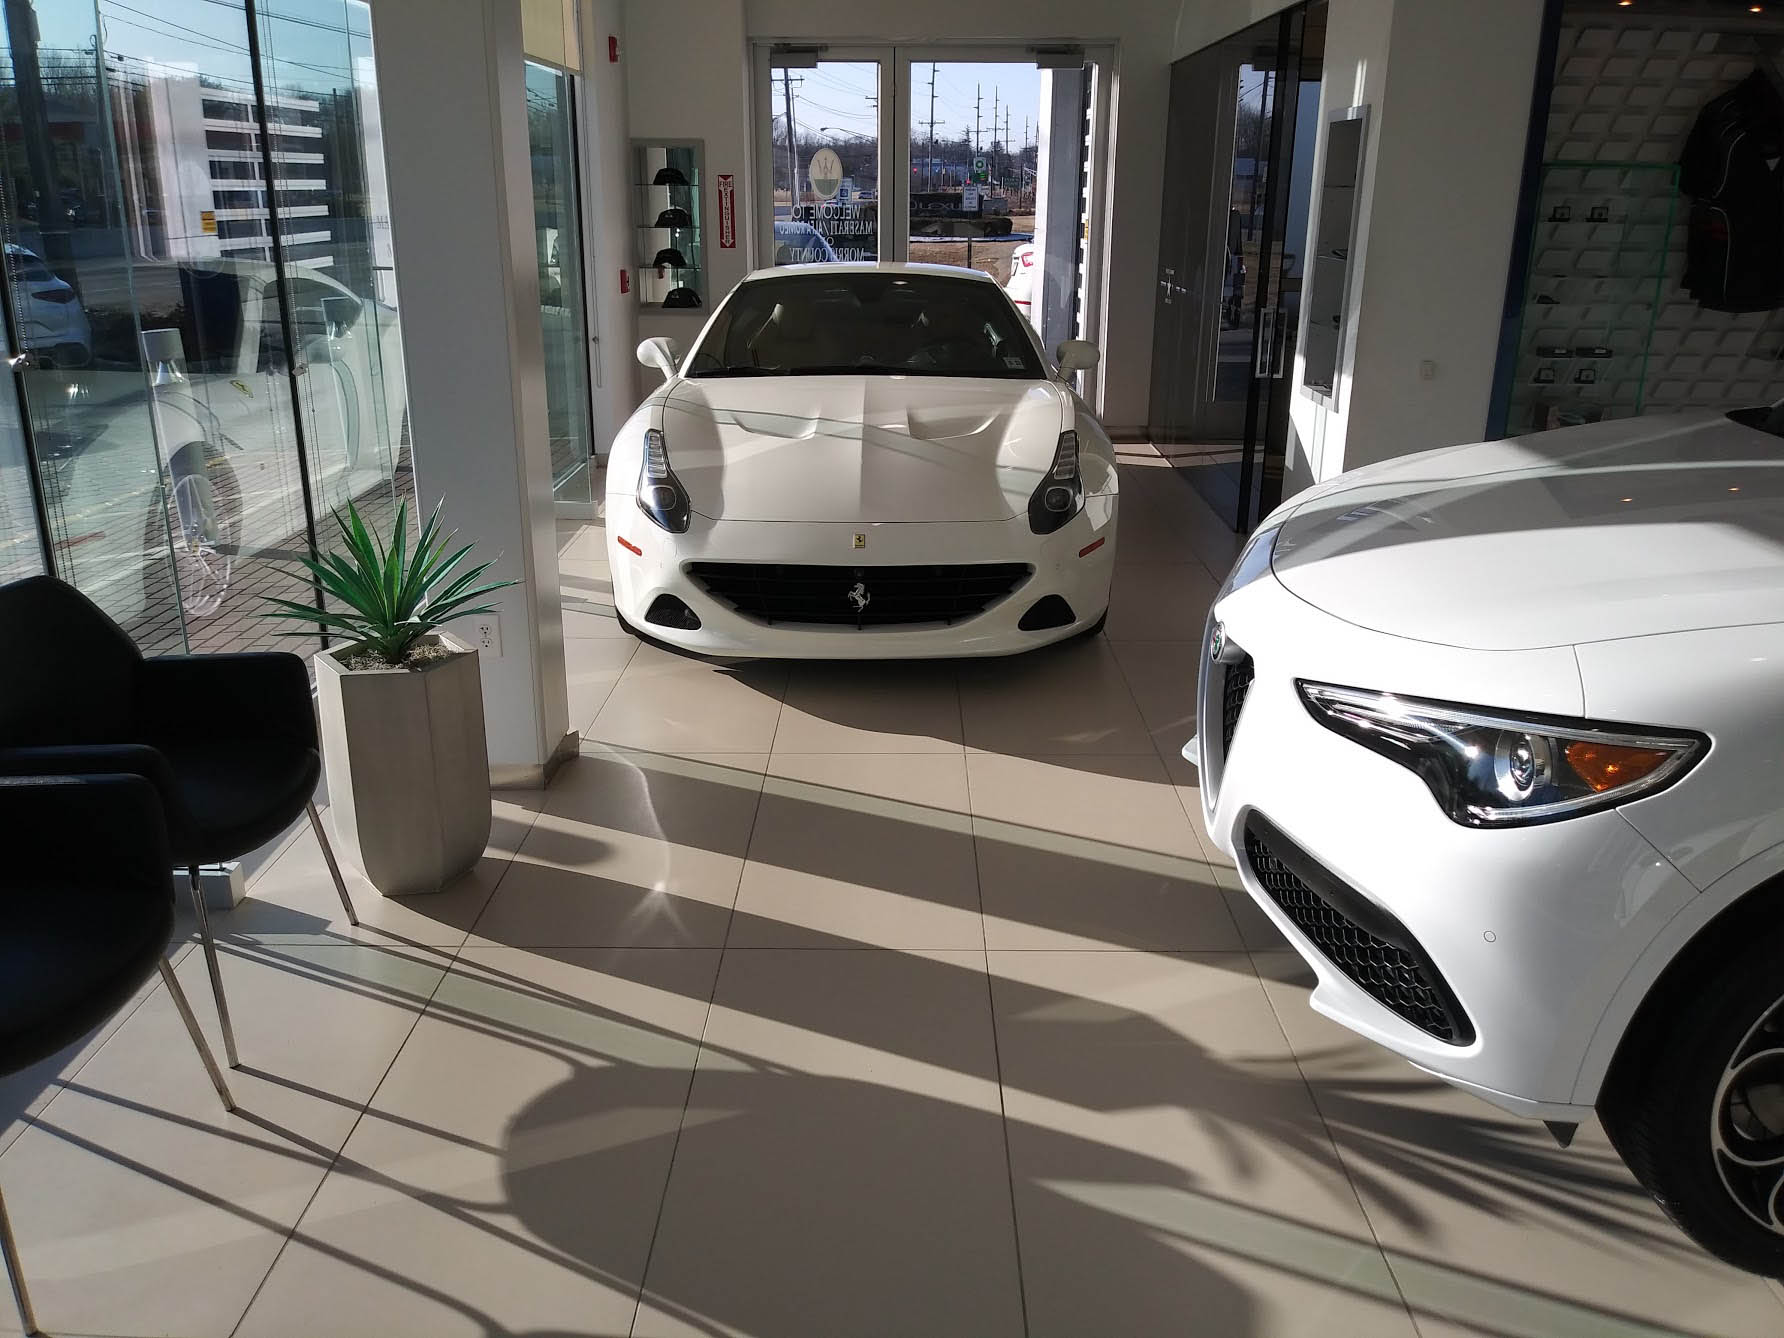 White Ferrari parked inside a Maserati dealership